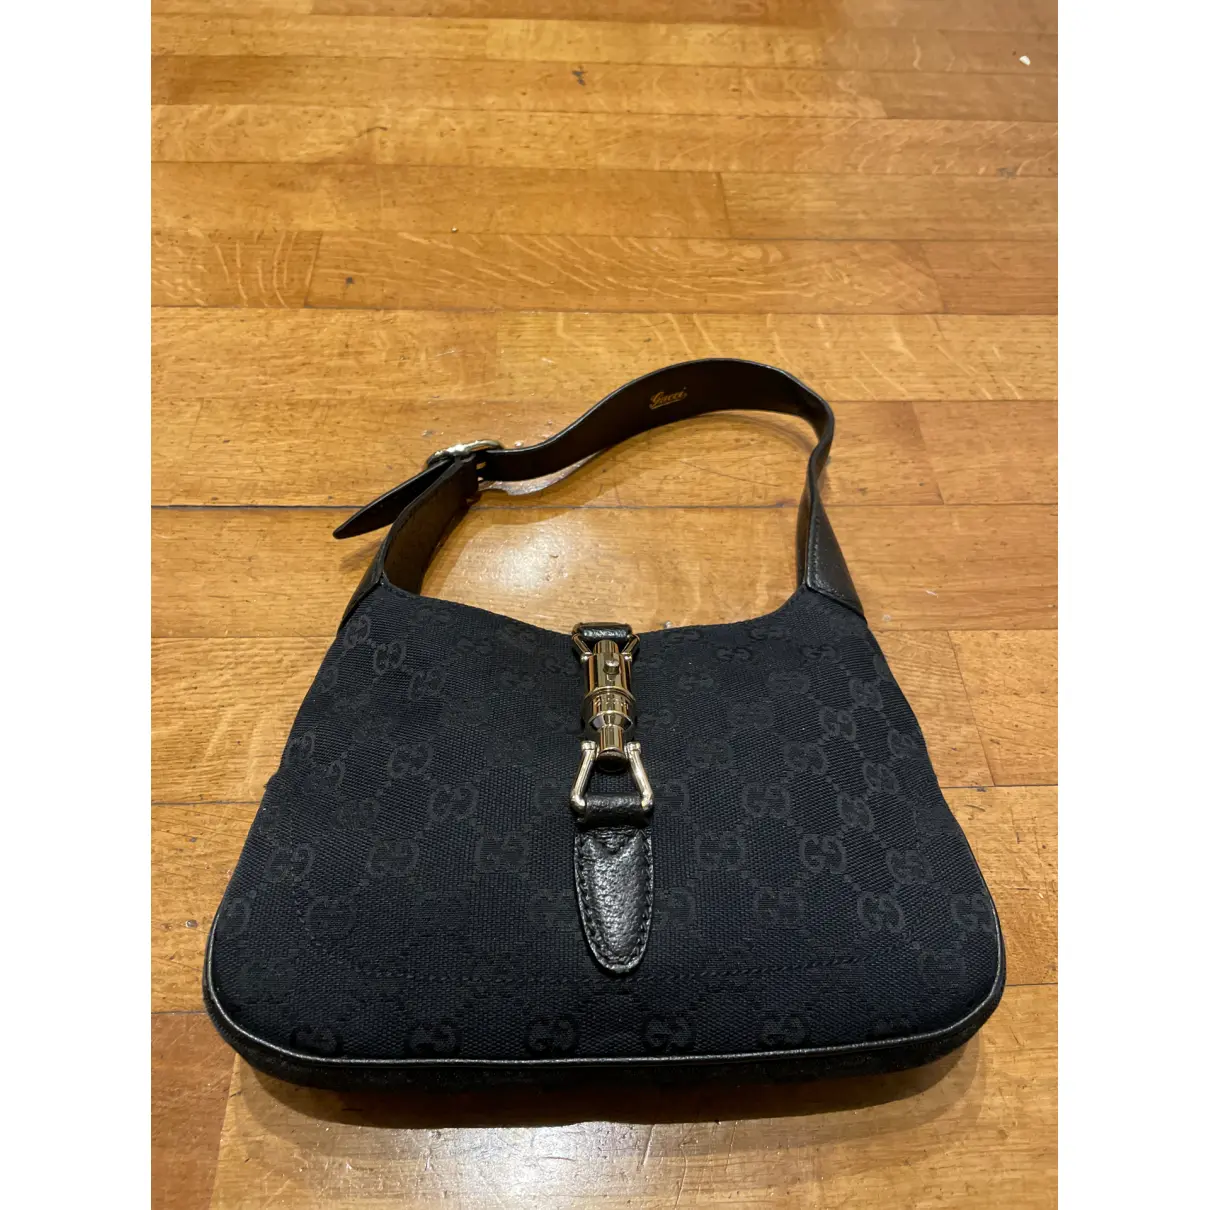 Jackie 1961 leather handbag Gucci